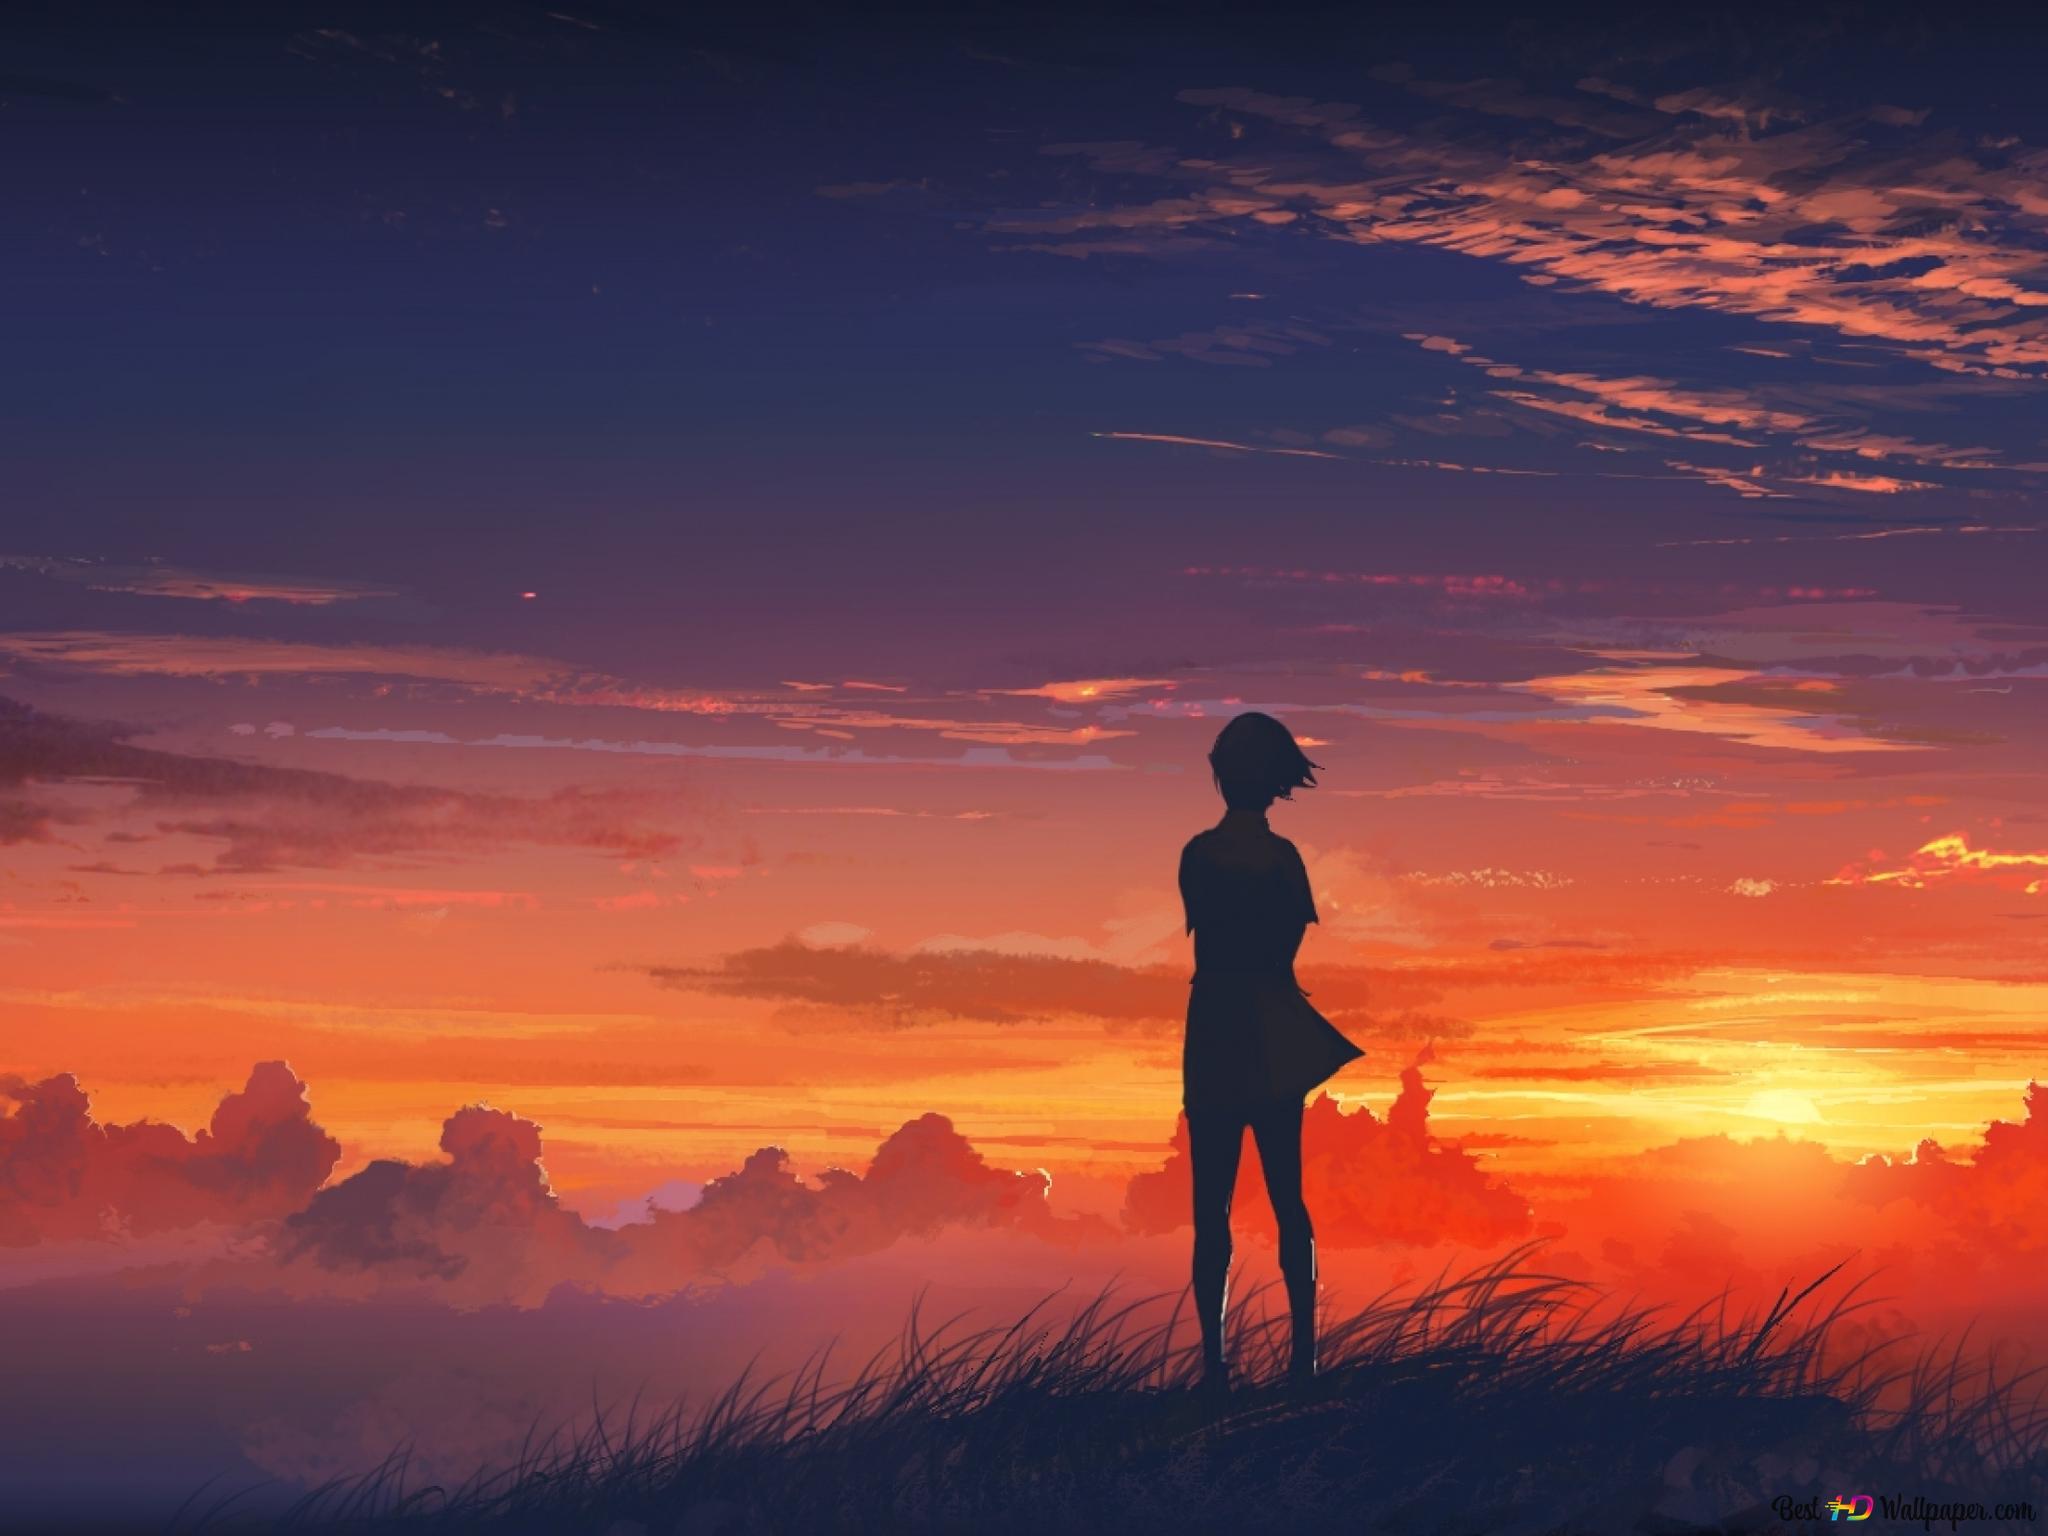 Anime girl watching scenery alone 2K wallpaper download